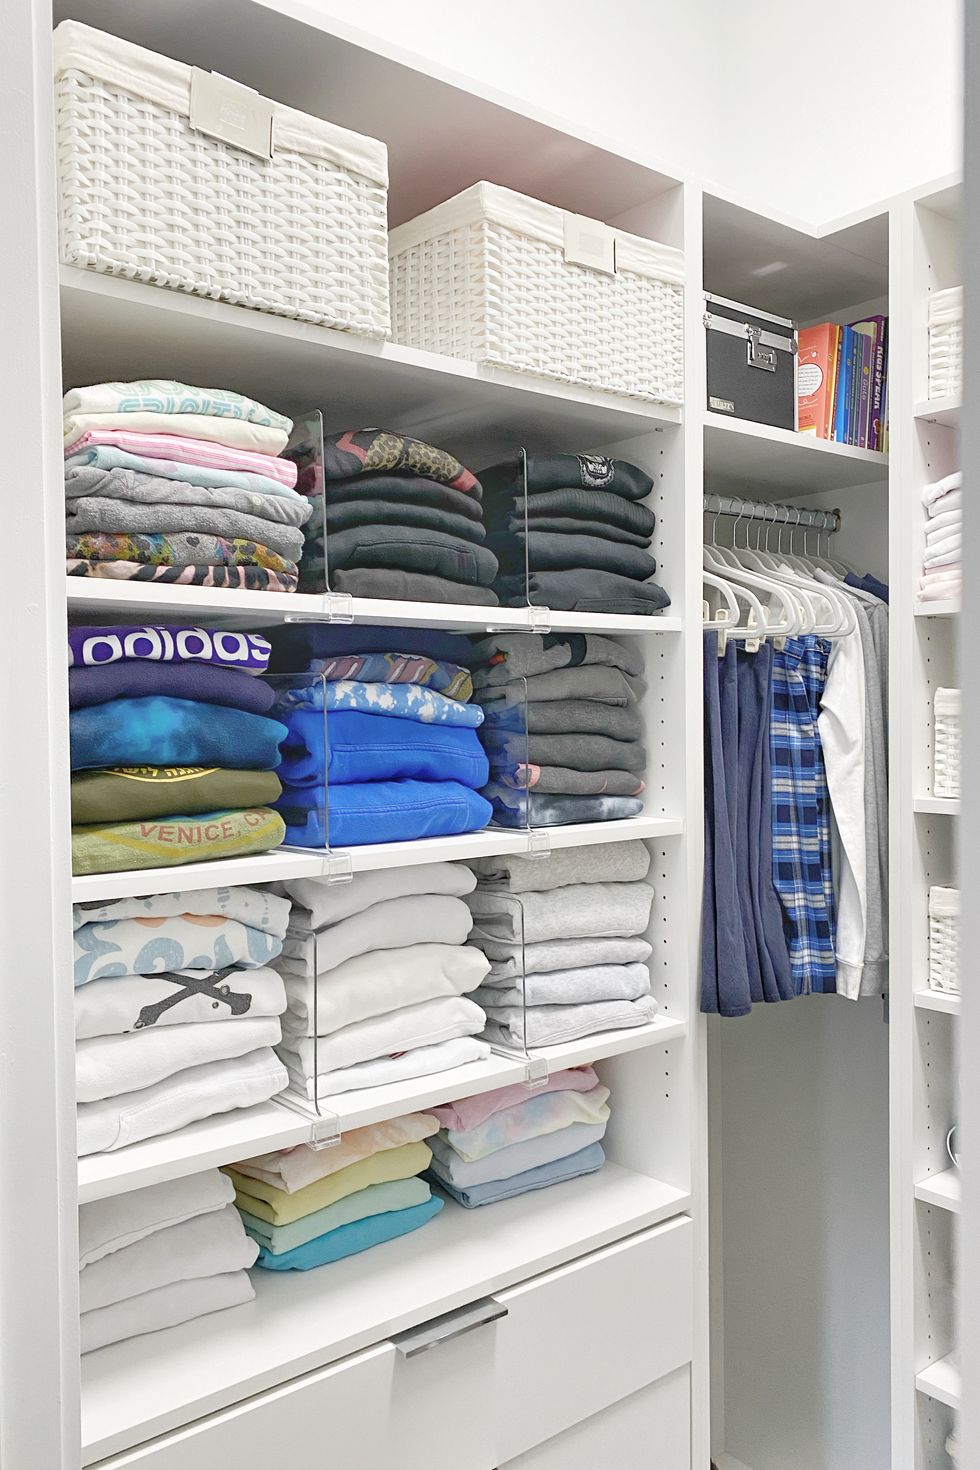 a closet full of folded clothes